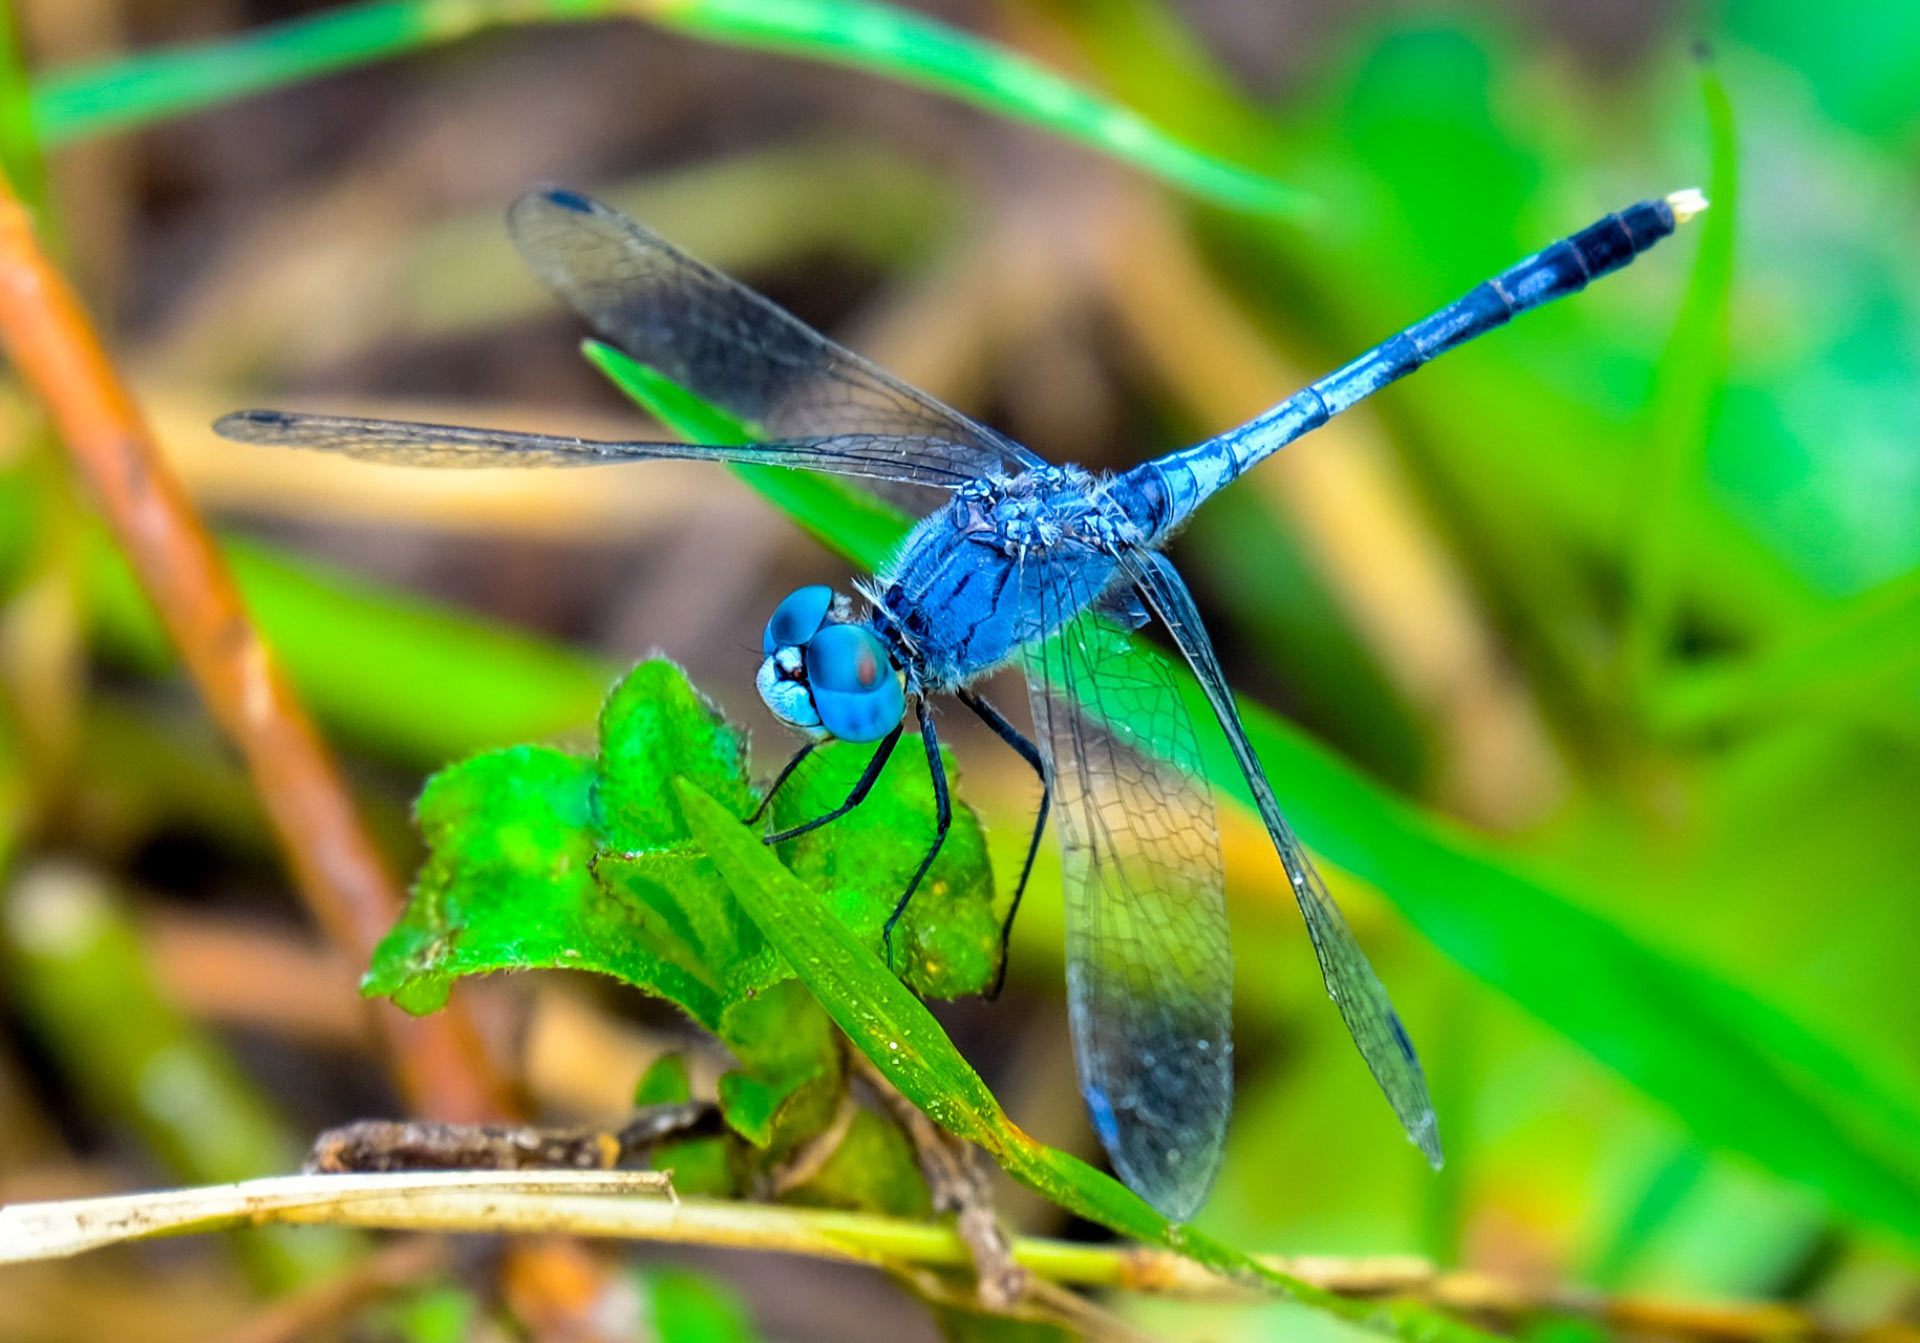 Predatory Dragonflies Can Predict Path of Their Flying Prey ...